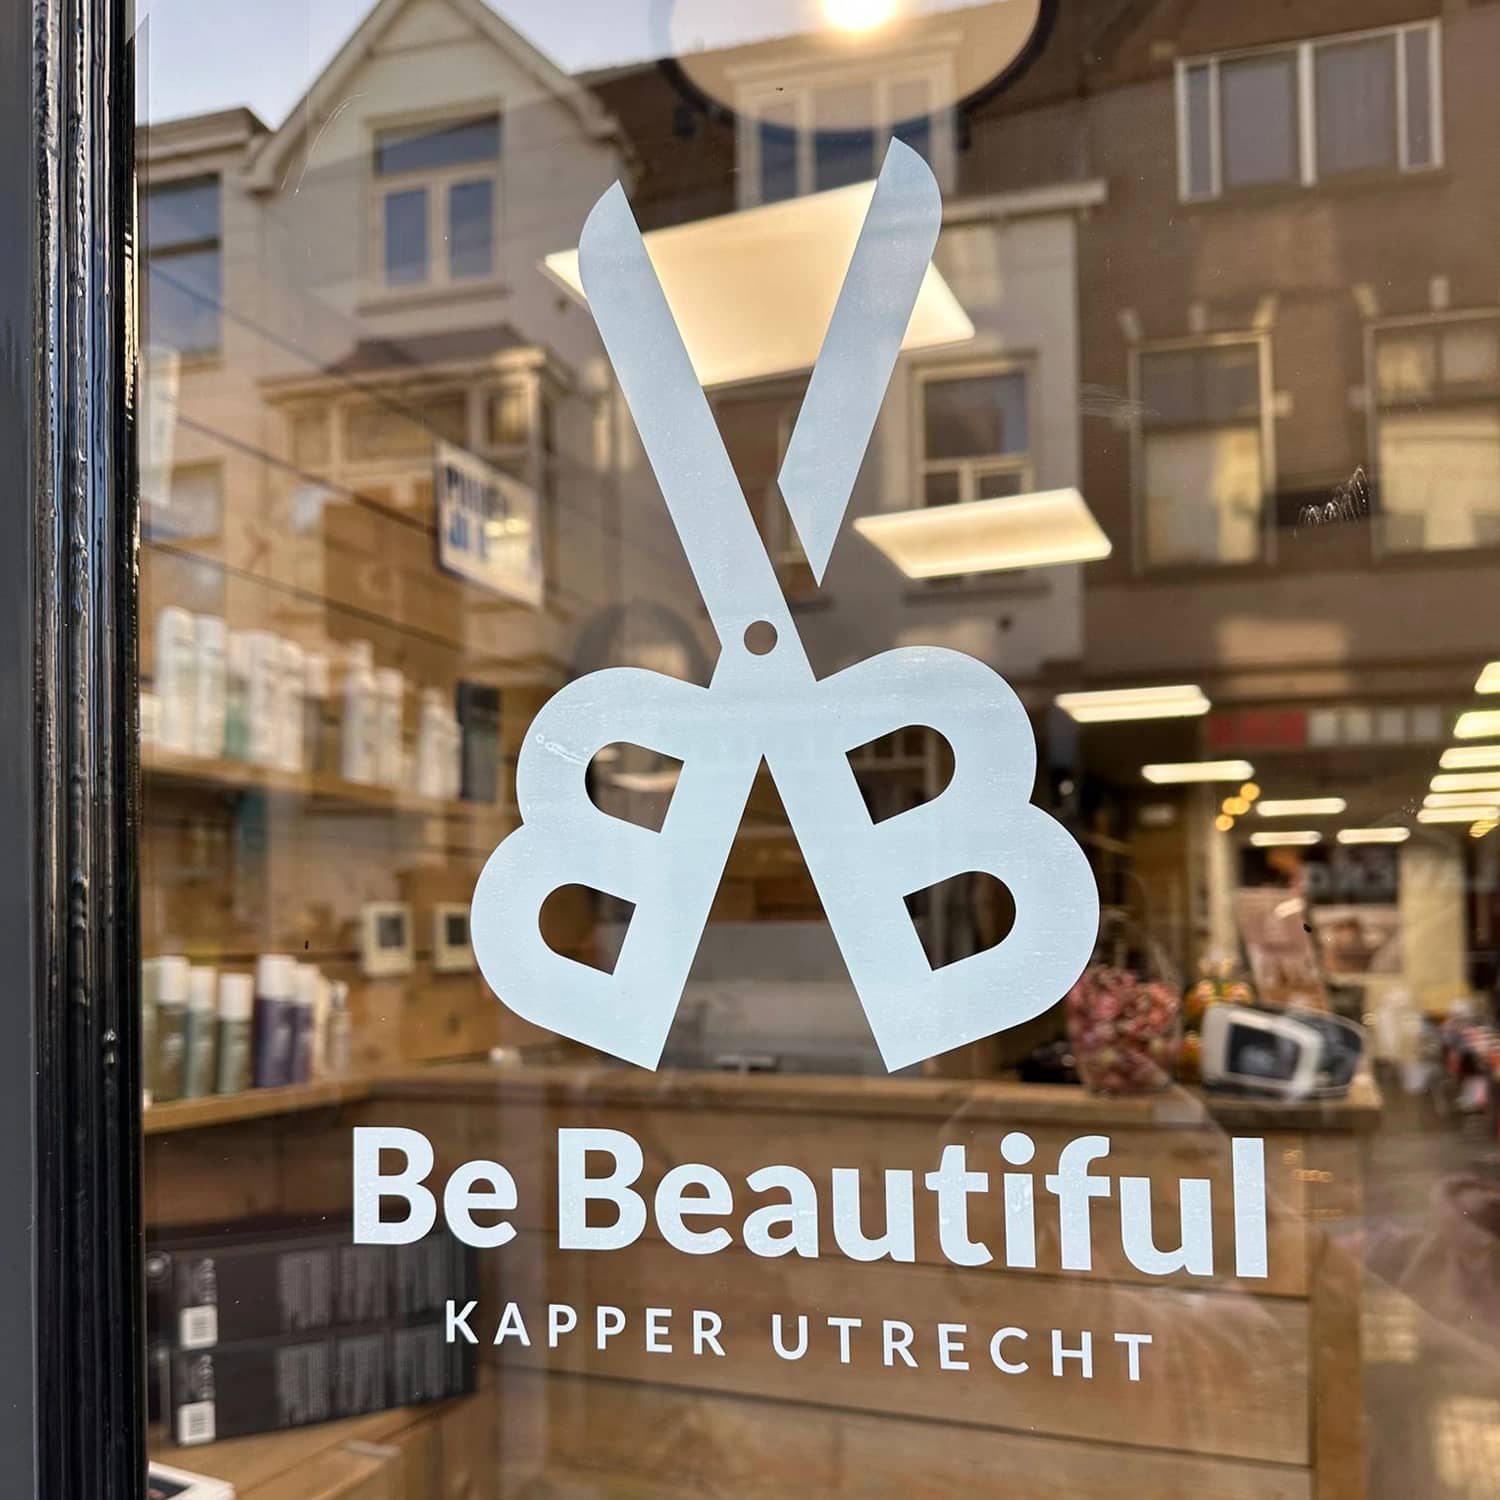 (c) Kapsalonbebeautiful.nl